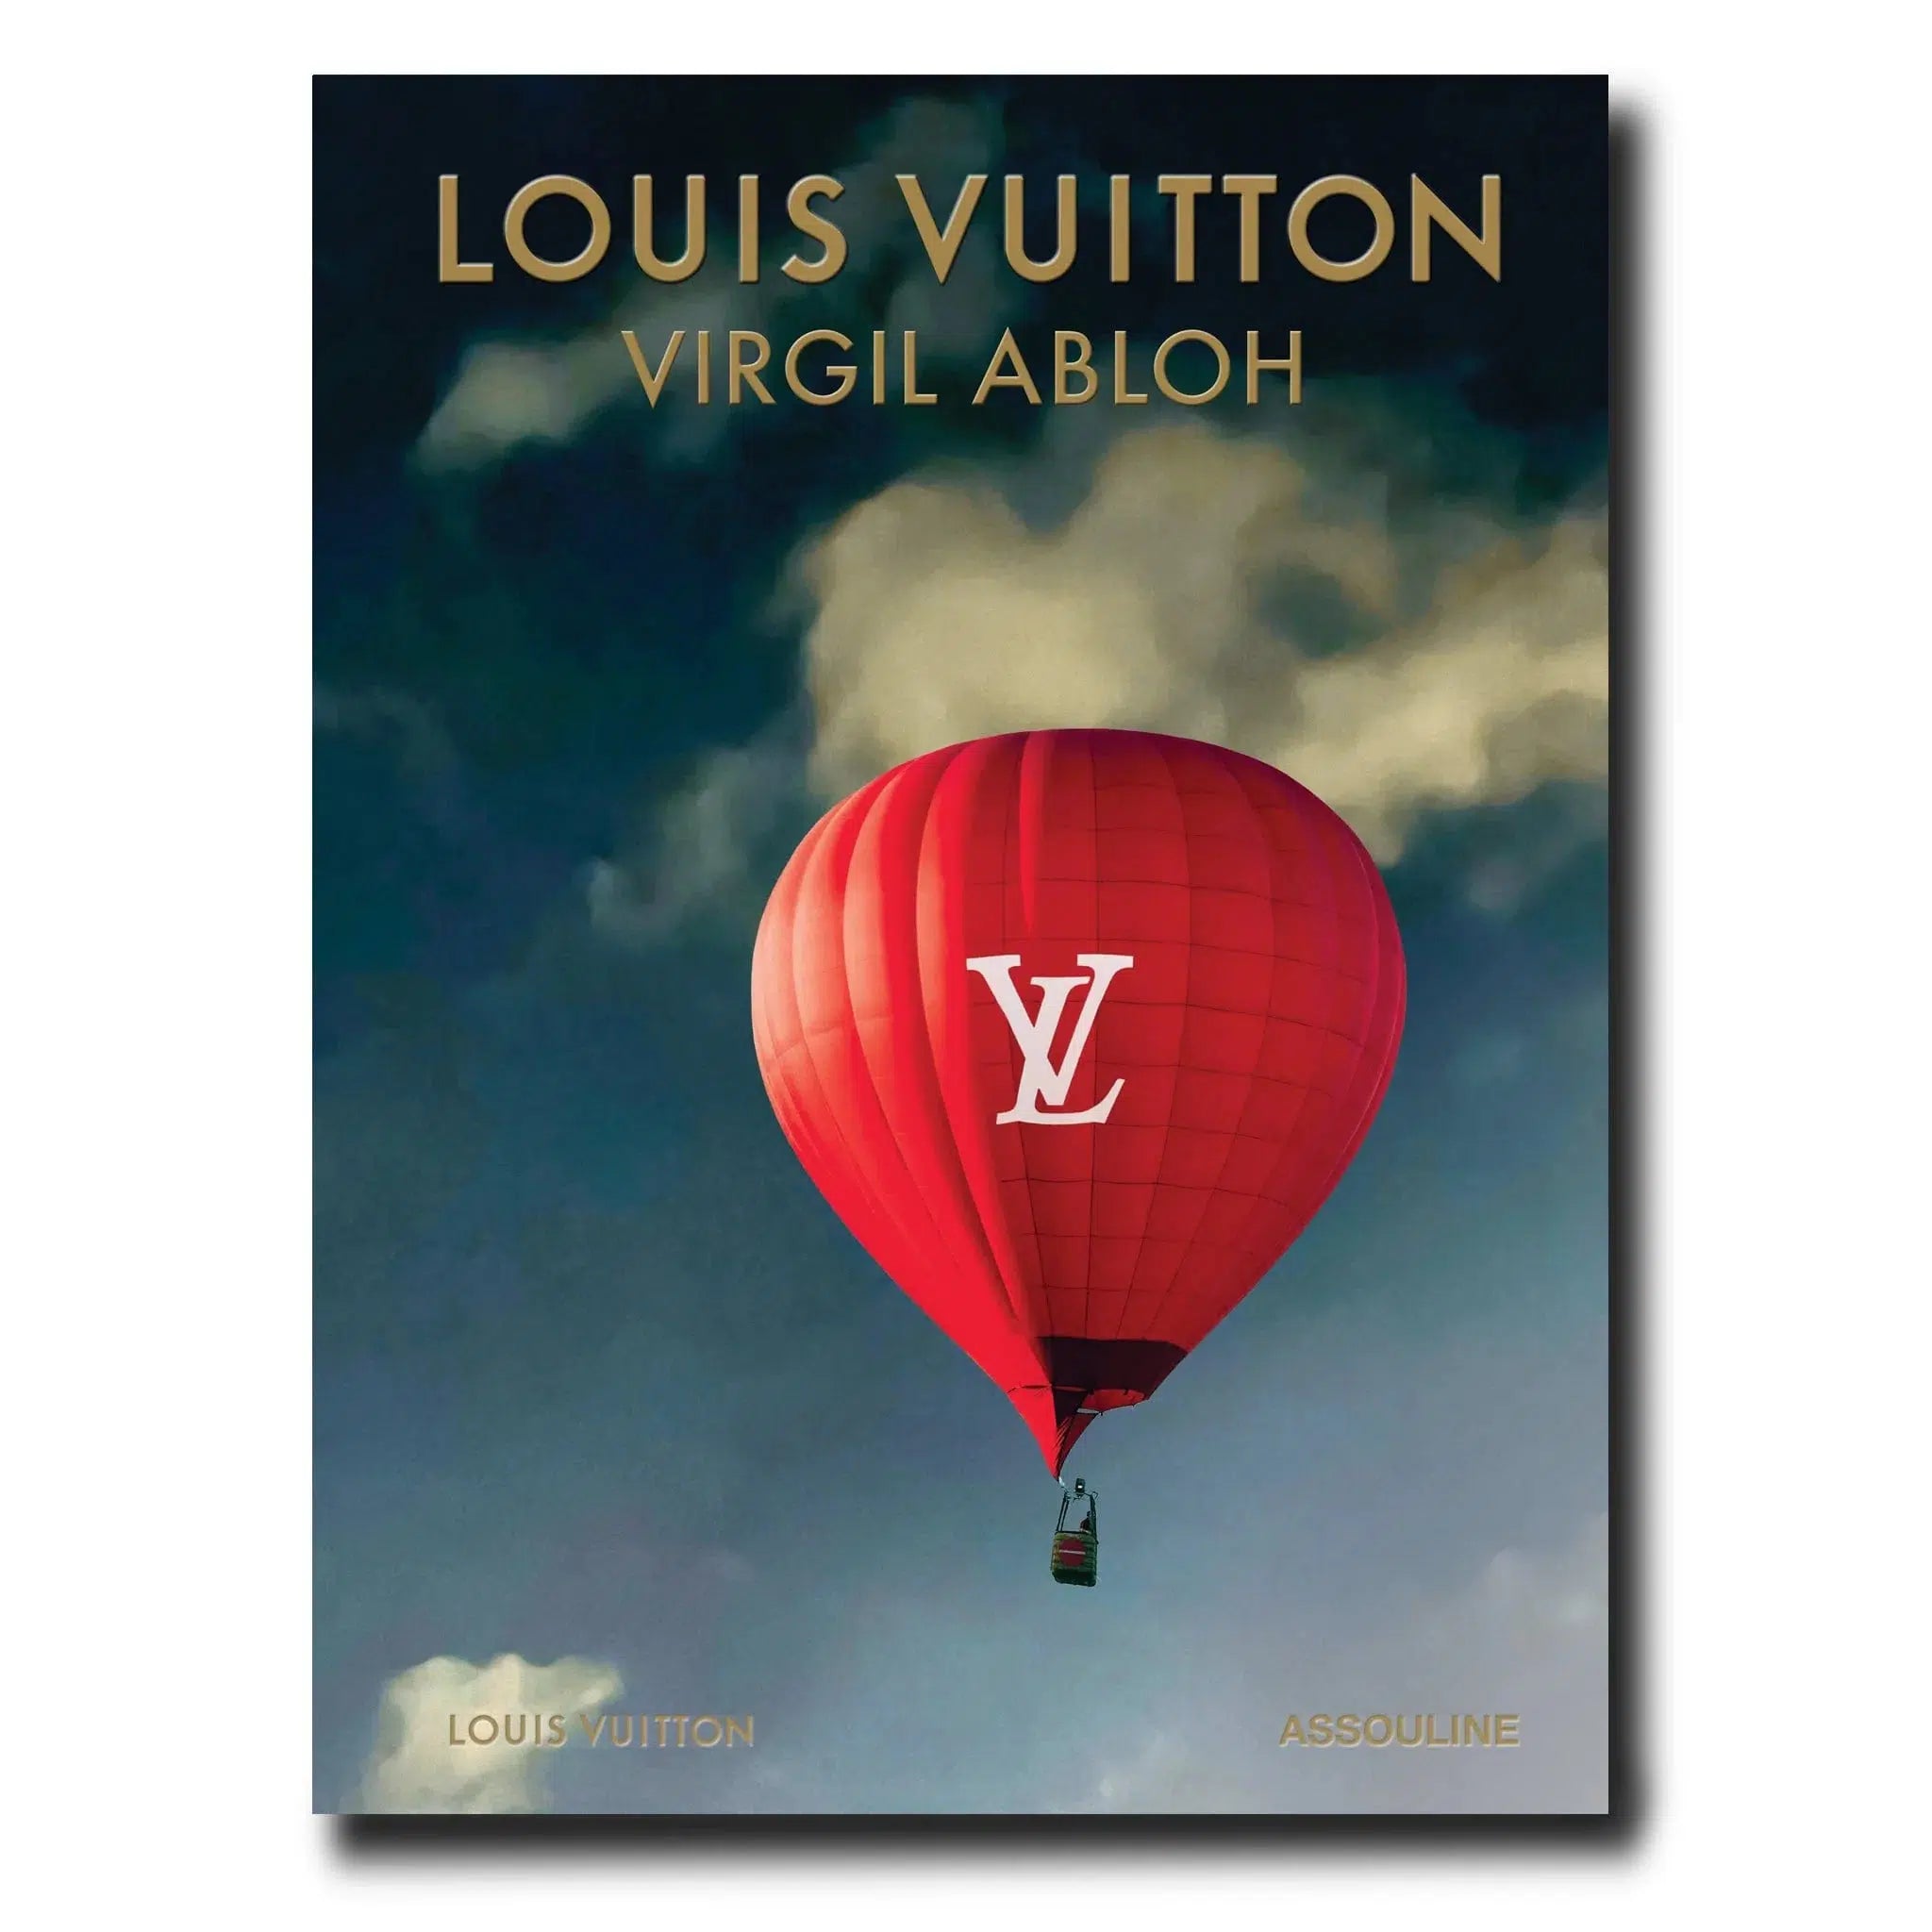 LOUIS VUITTON #16, LV, THE BOOK. Brand New! FUN, STYLISH COFFEE TABLE Book